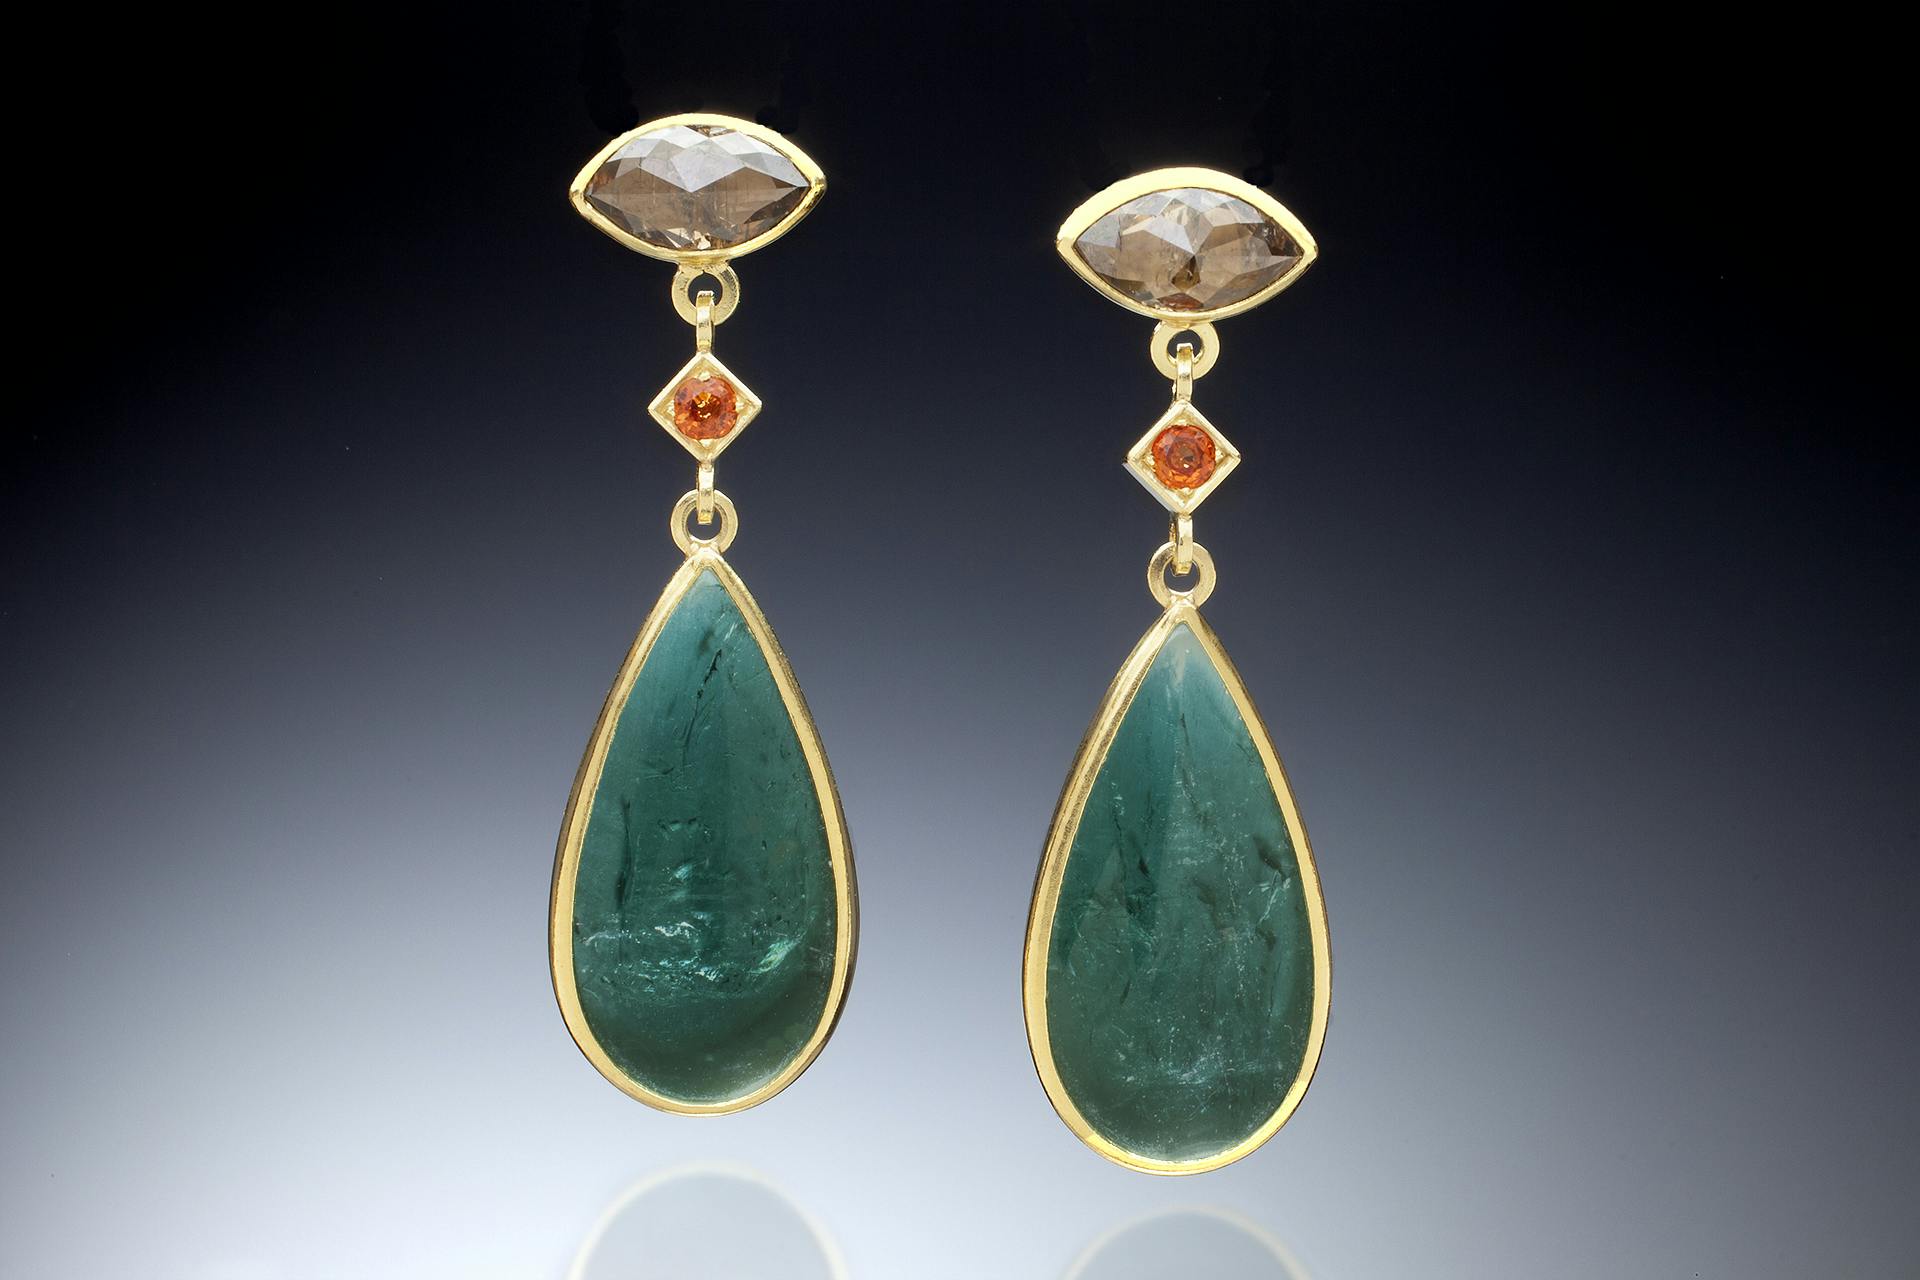 pair of handcrafted pendant earrings